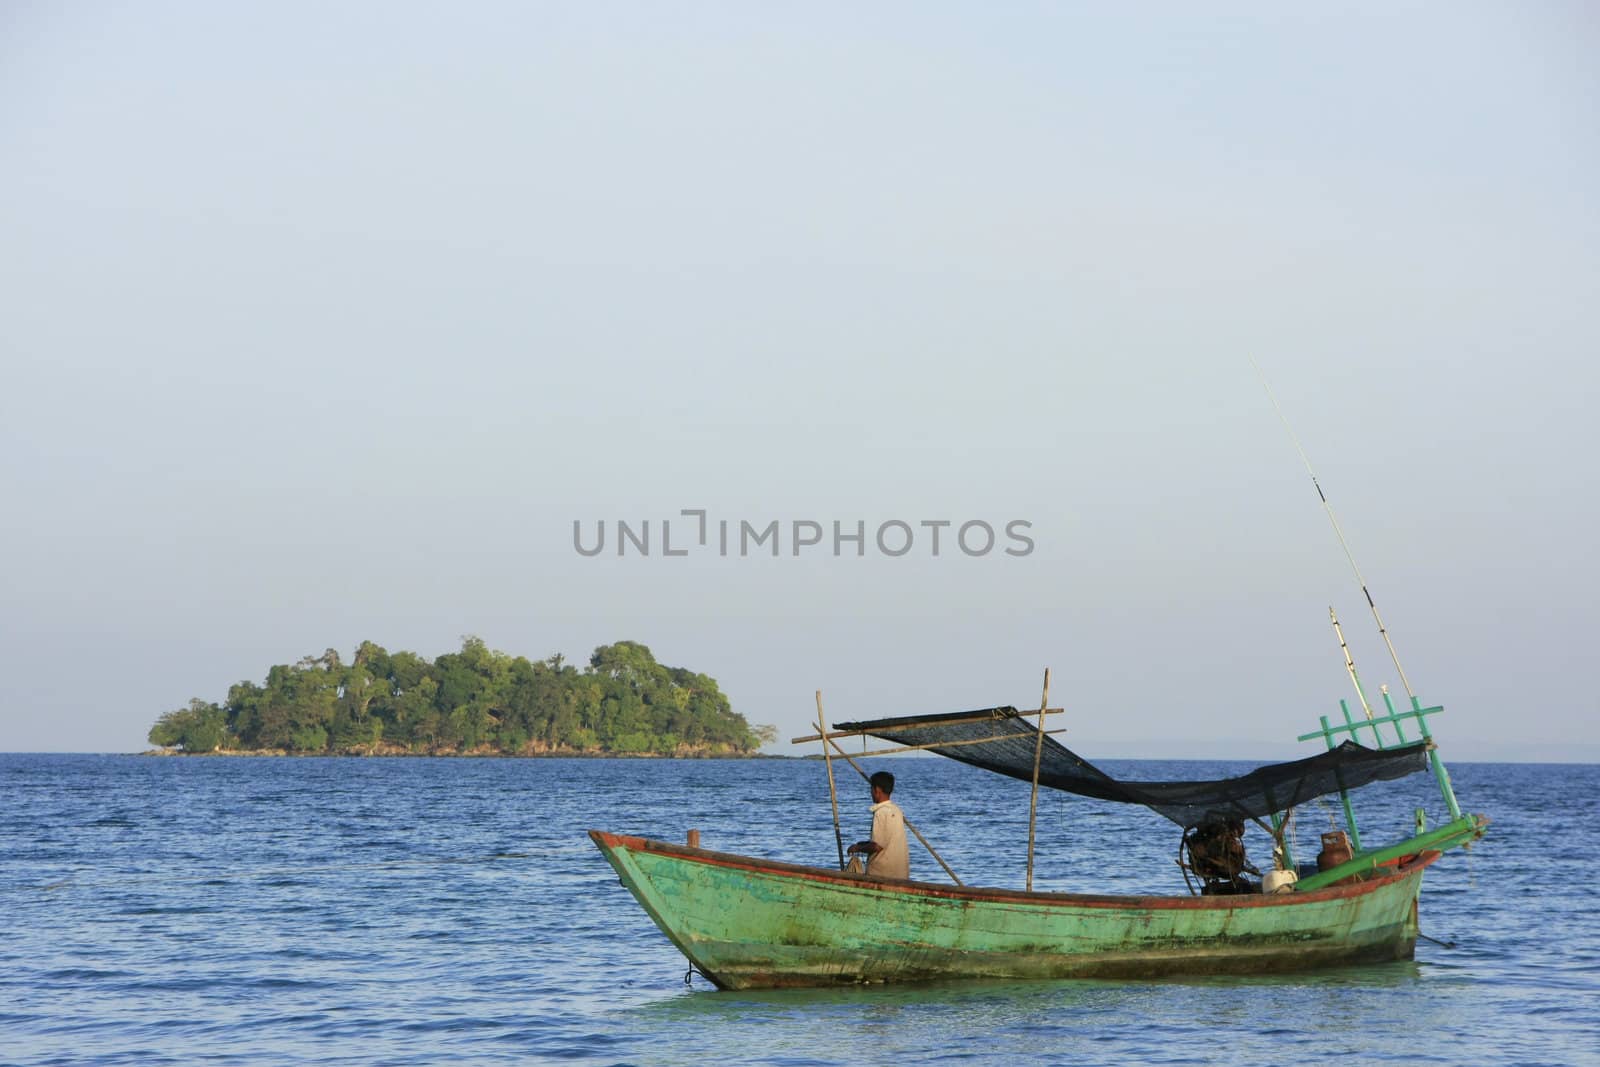 Fishing boat and Pagoda island, Gulf of Thailand, Cambodia by donya_nedomam